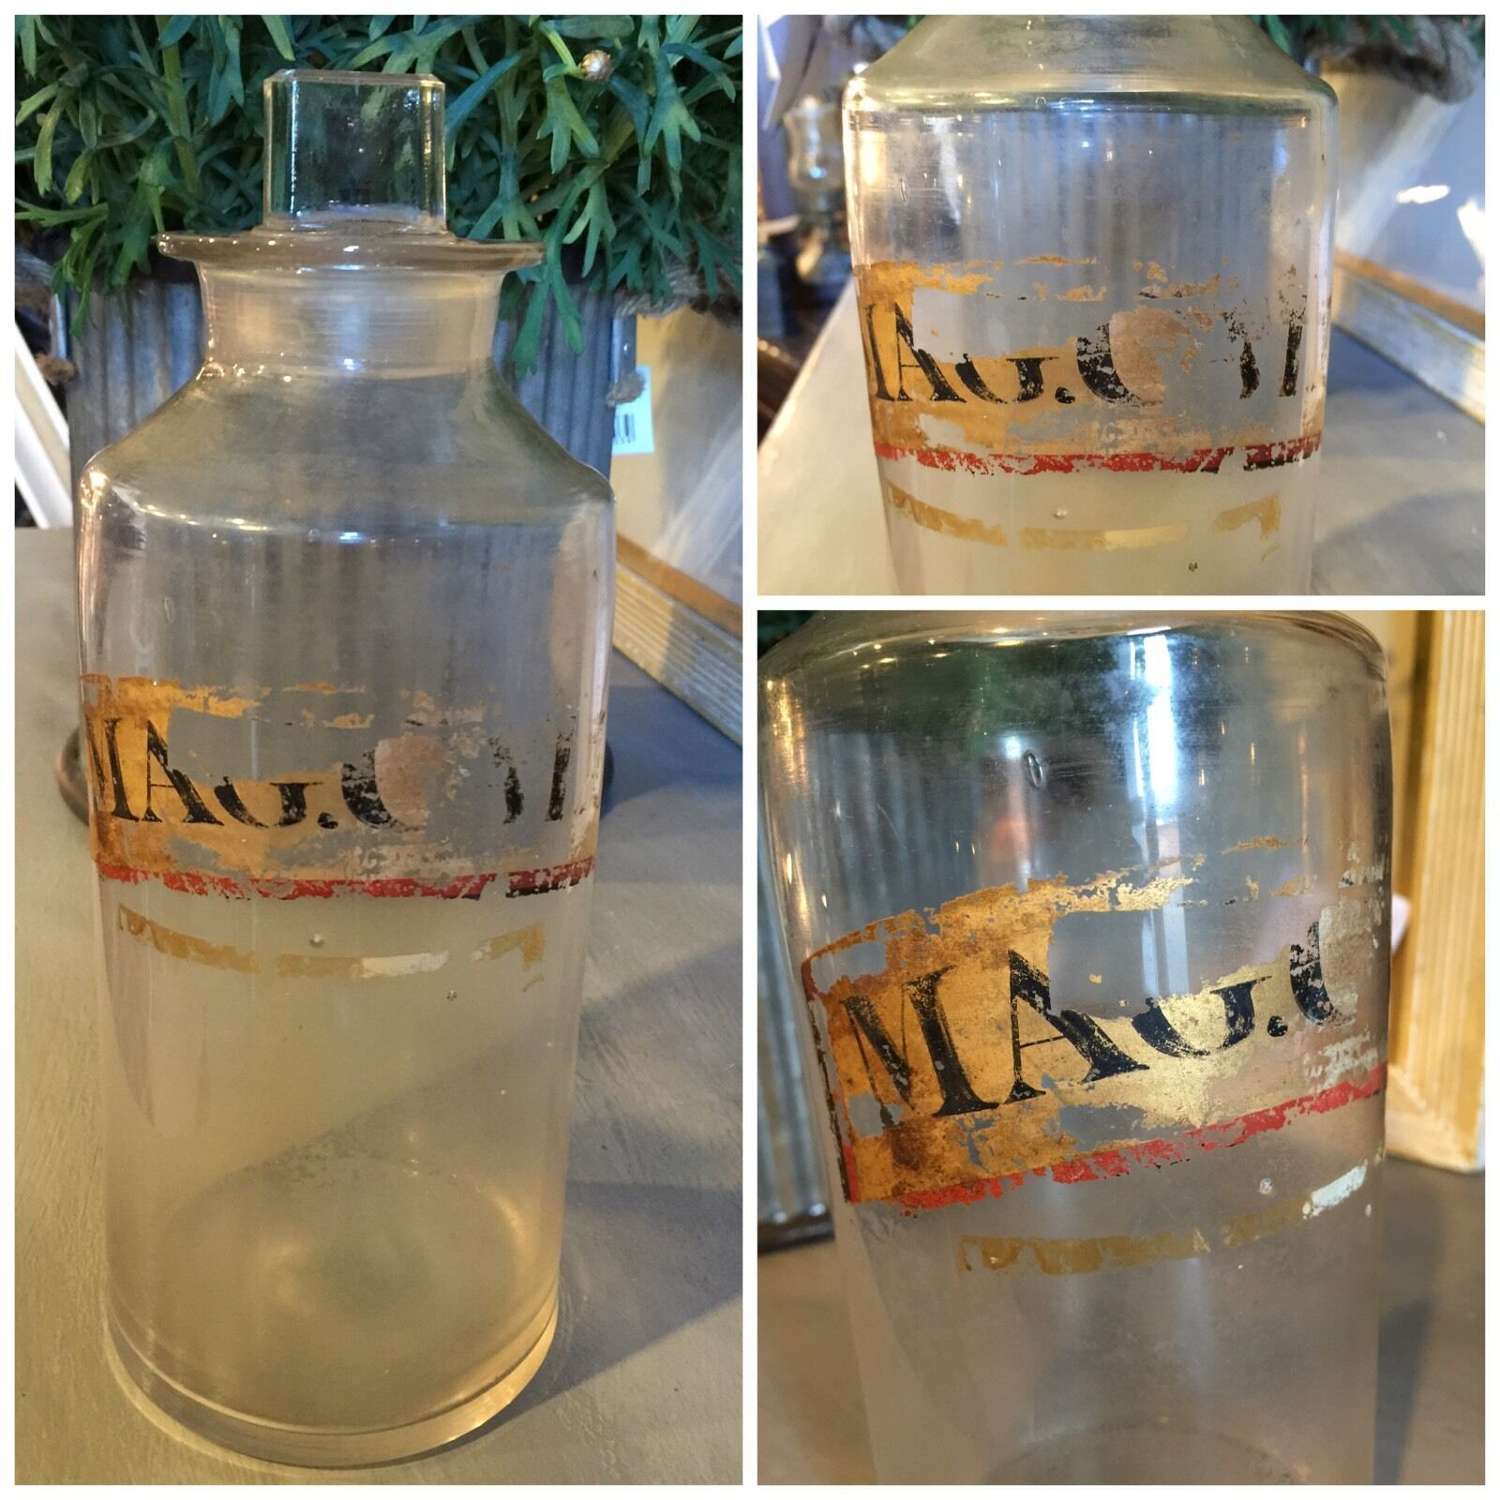 19th Century apothecary jar